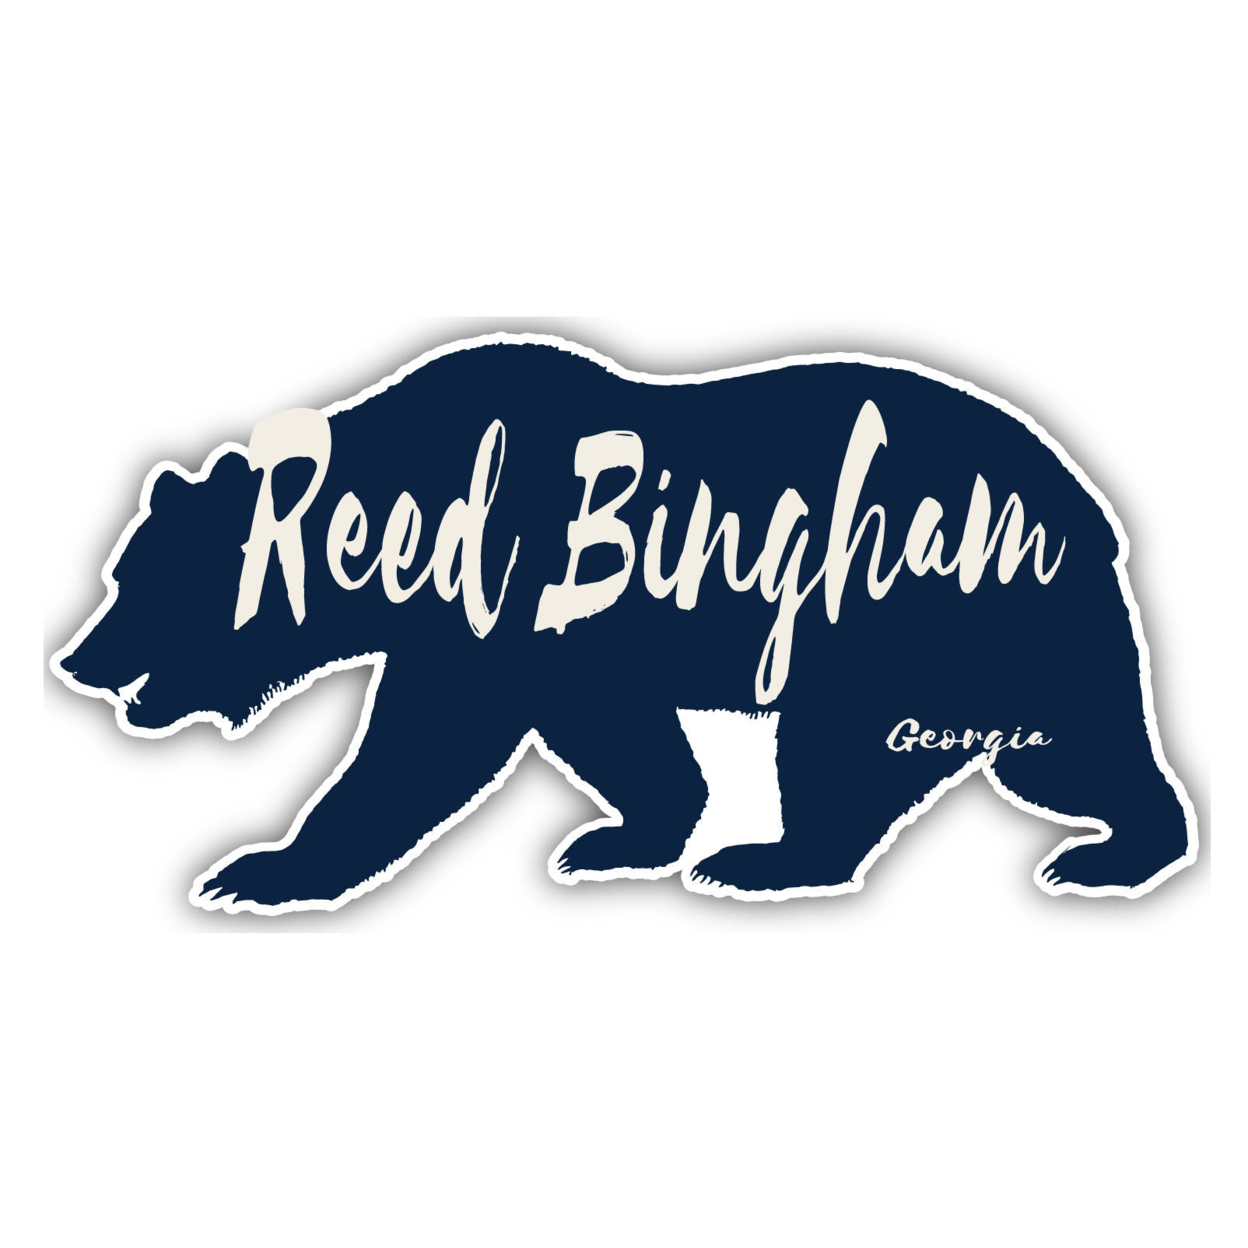 Reed Bingham Georgia Souvenir Decorative Stickers (Choose Theme And Size) - Single Unit, 2-Inch, Bear